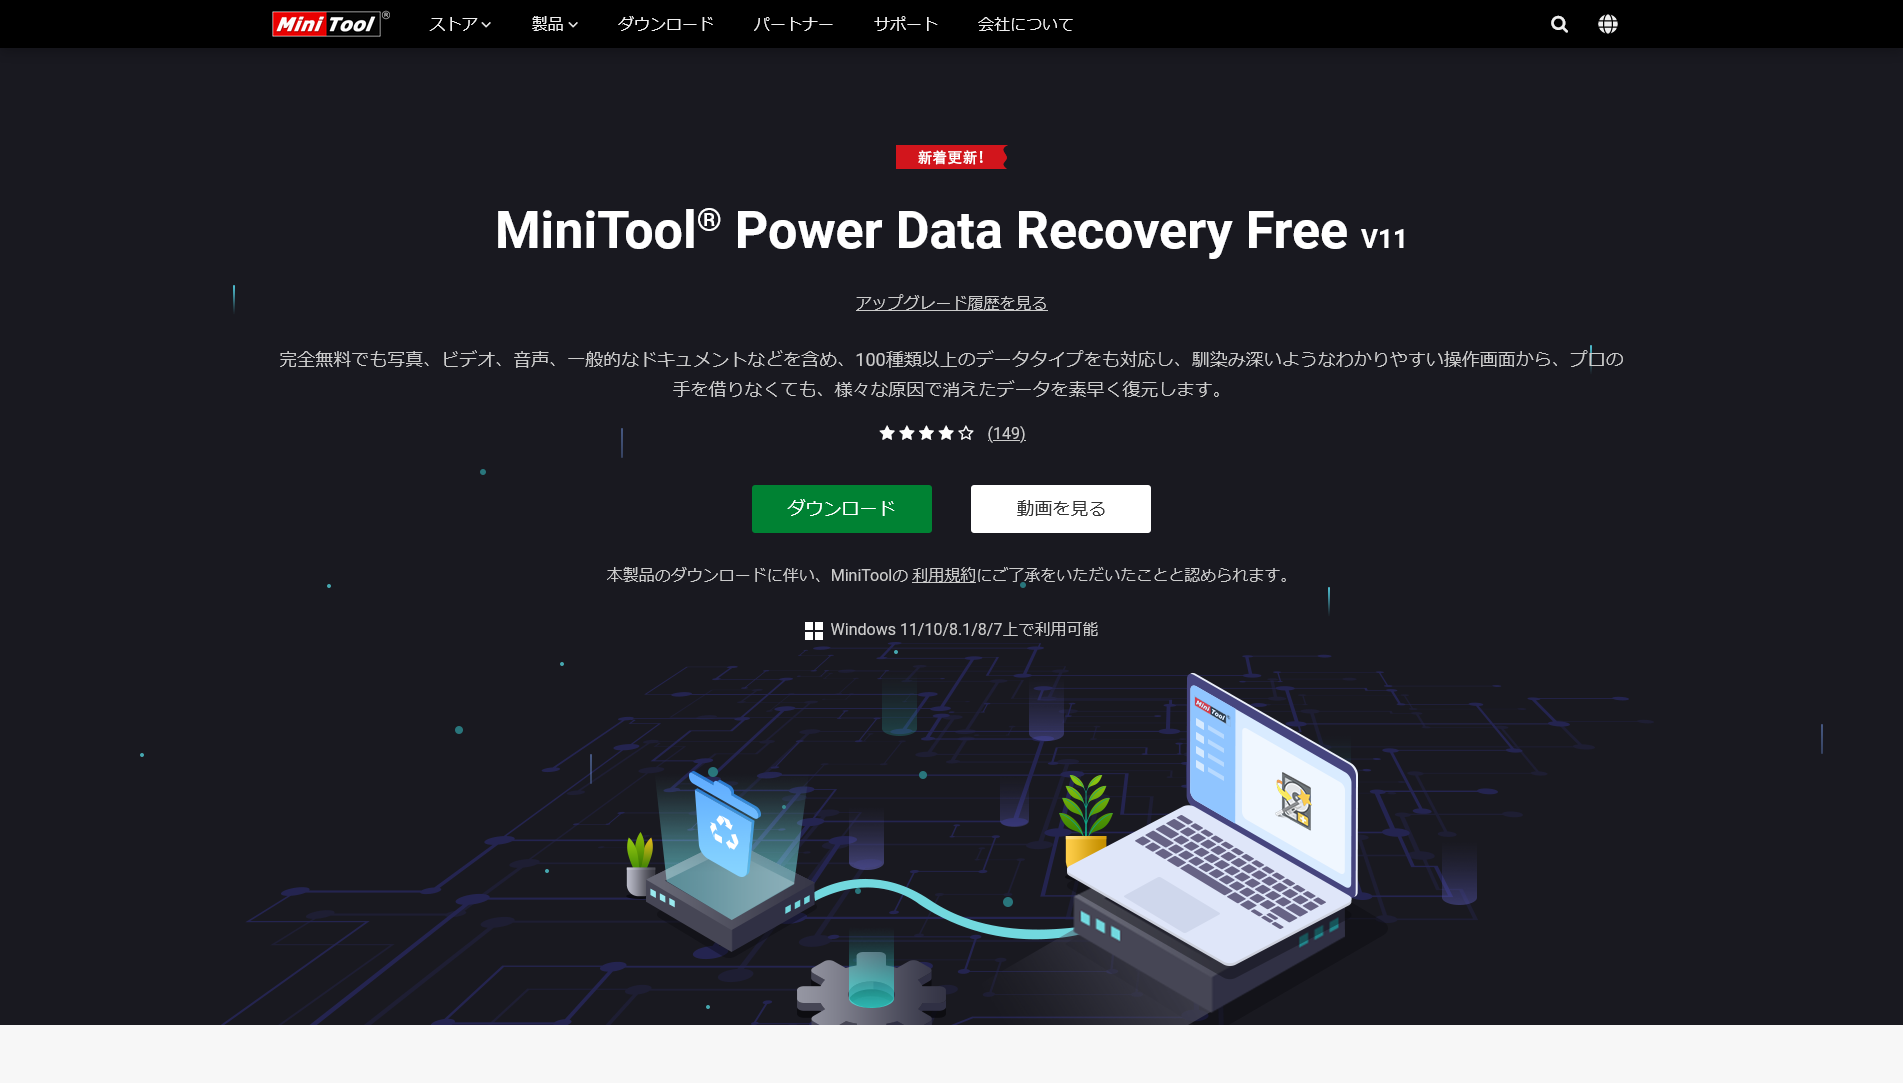 Minitool Power Data Recovery Toppage